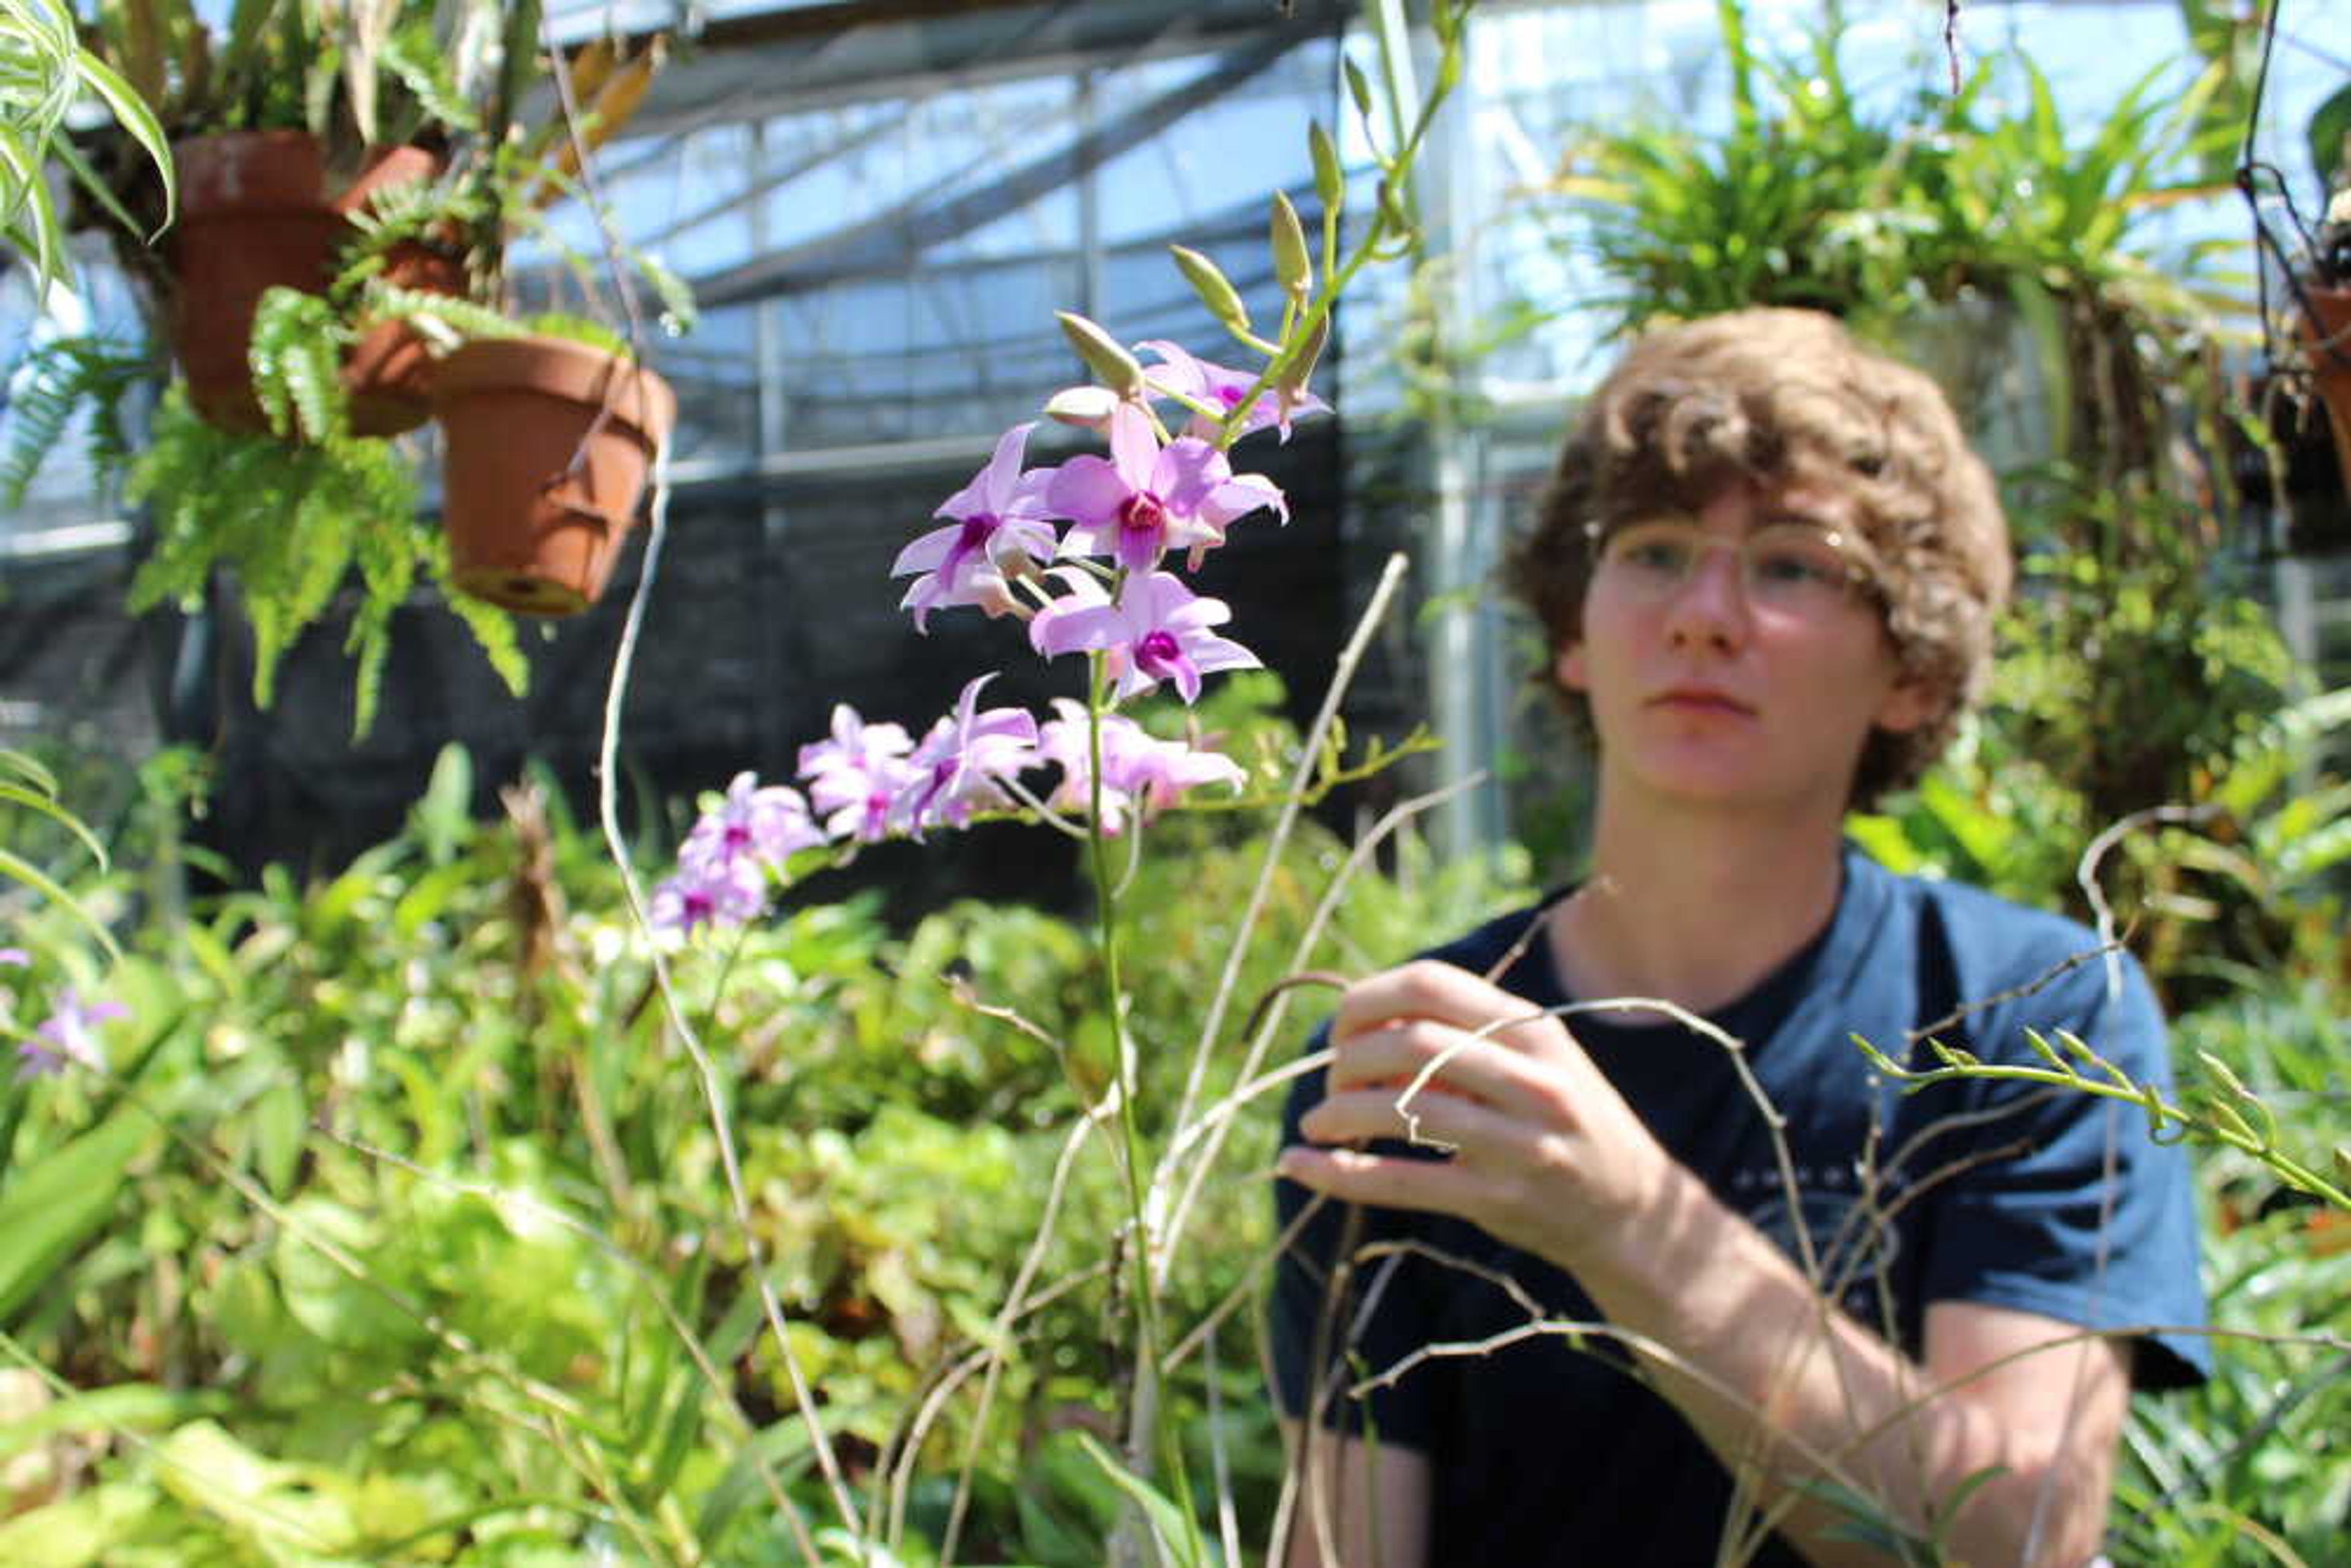 SEMO students showcase horticulture skills at Charles Hutson Greenhouse